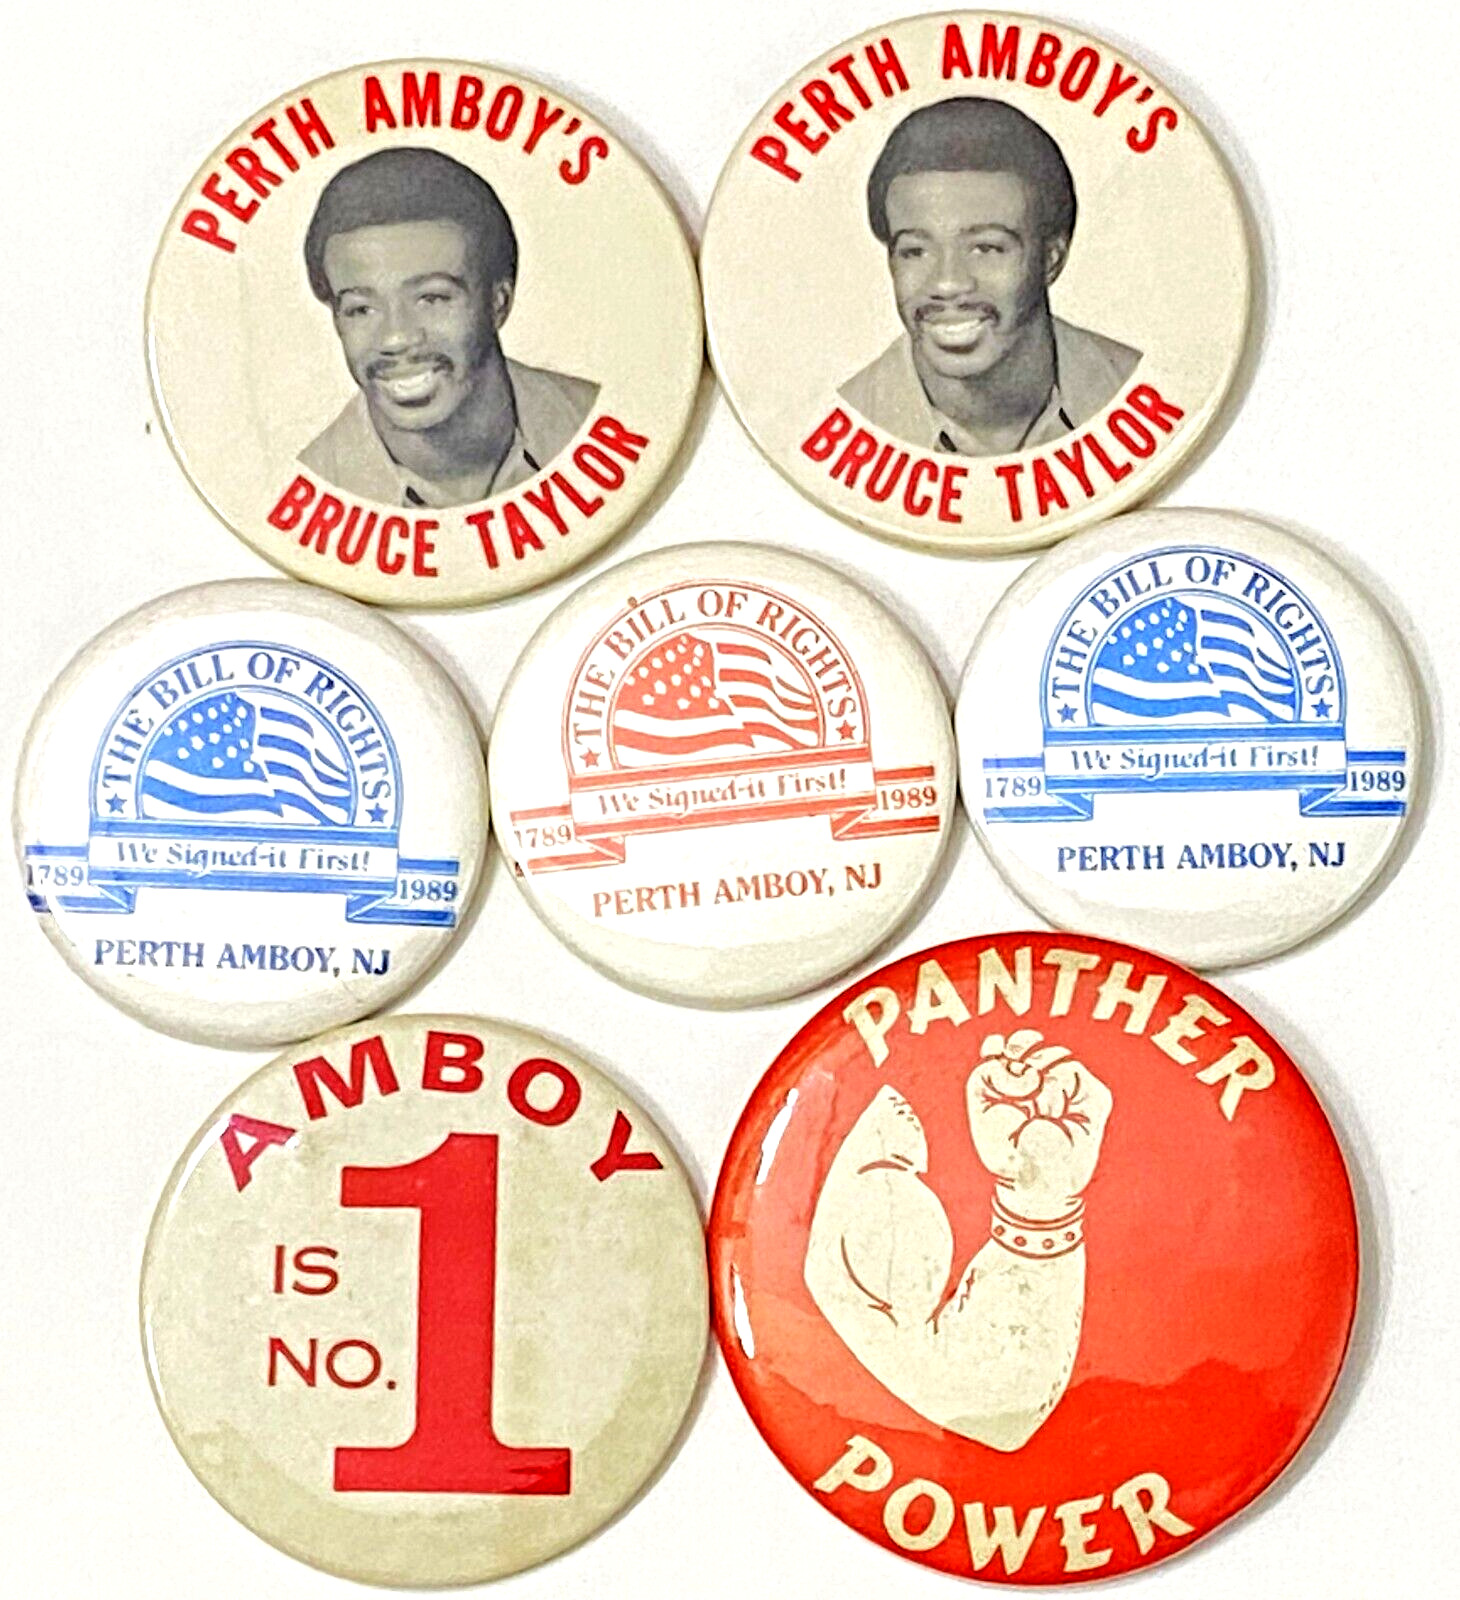 7 Vtg Pinback Buttons Perth Amboy NJ 1989 Bill of Rights Bruce Taylor NFL Player